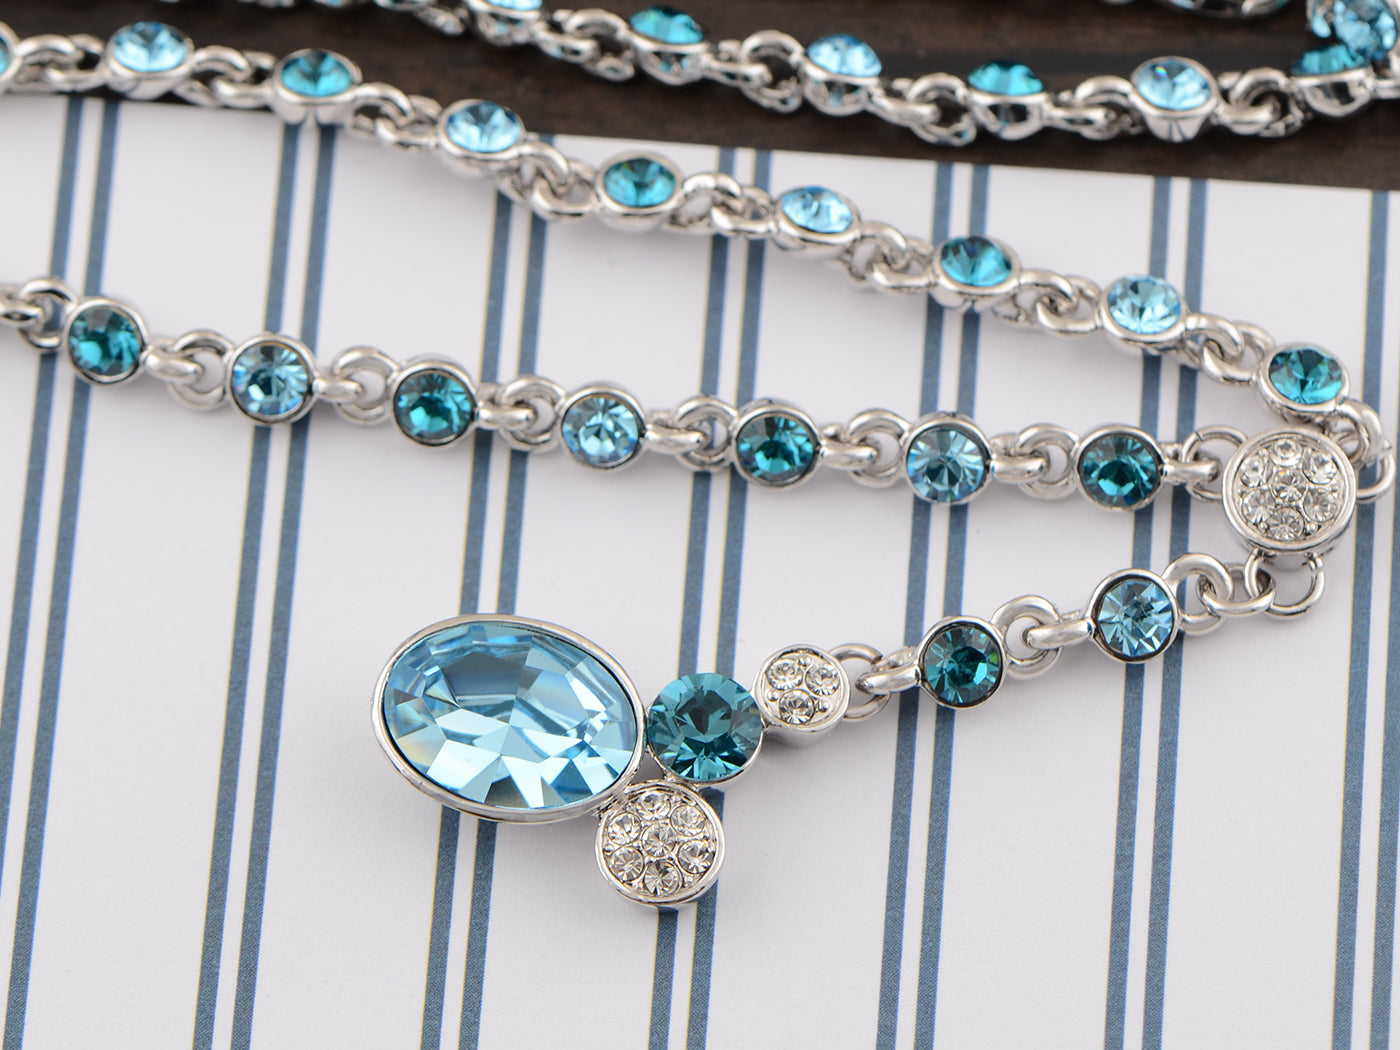 Swarovski Crystal Sapphire Blue Dangle Drop Chain Scarf Jewelry Necklace